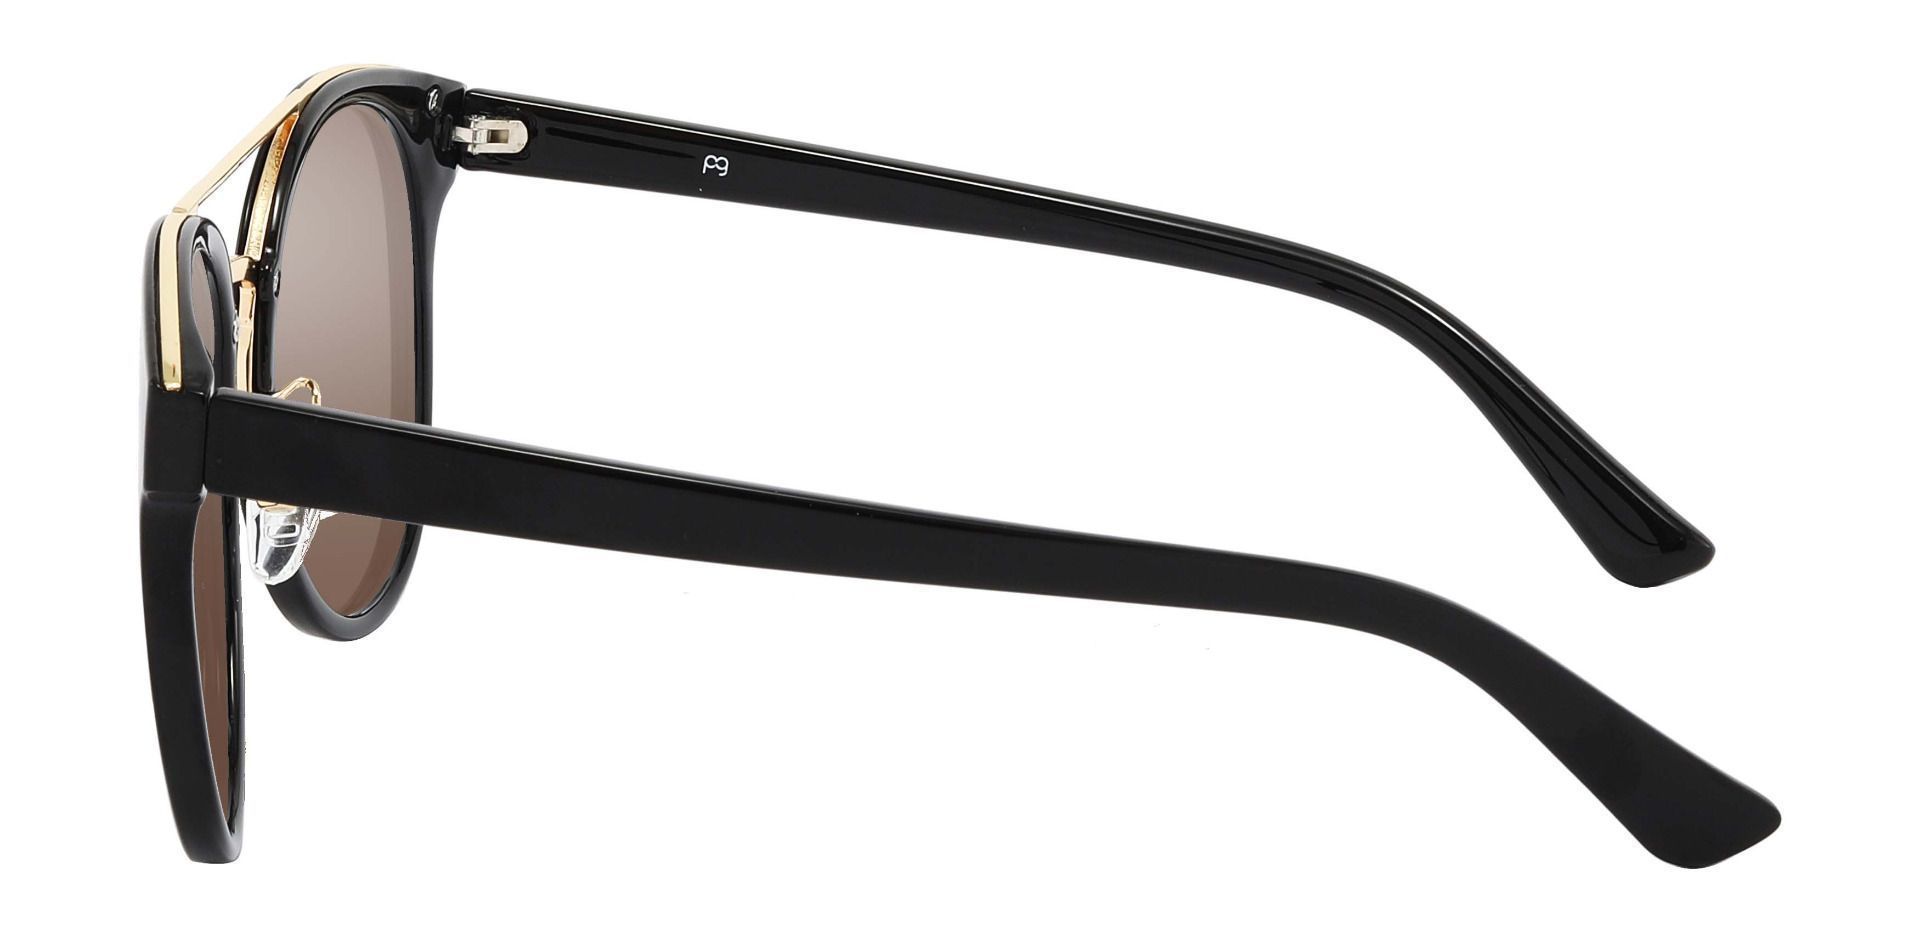 Oasis Aviator Prescription Sunglasses - Black Frame With Brown Lenses